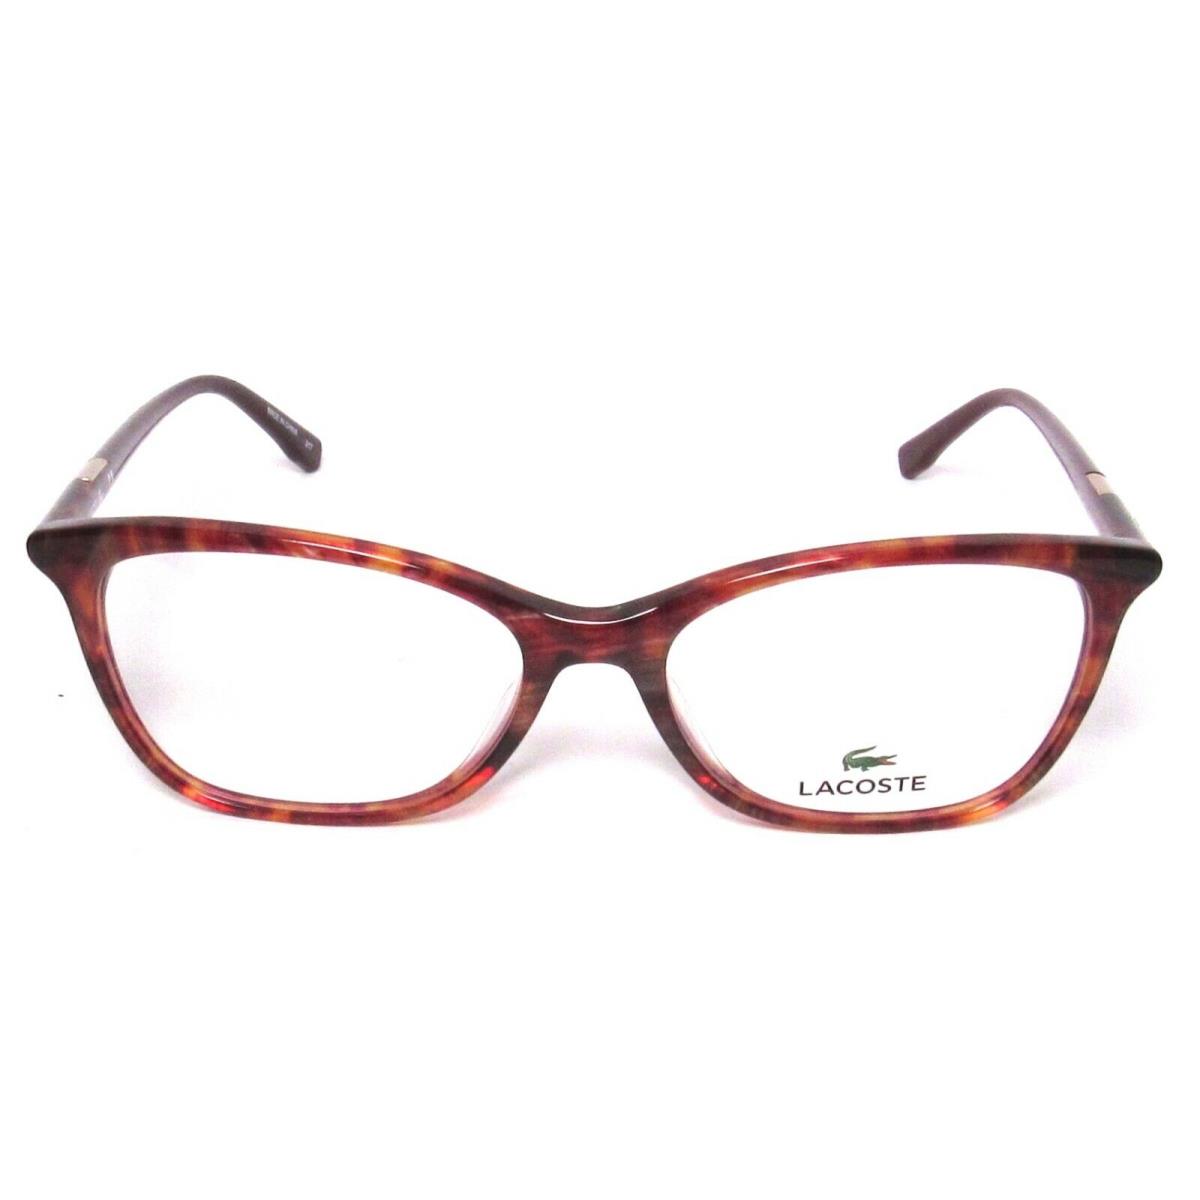 Lacoste L2791 615 Eyeglass/glasses Frames 54-16-140 Red >new<